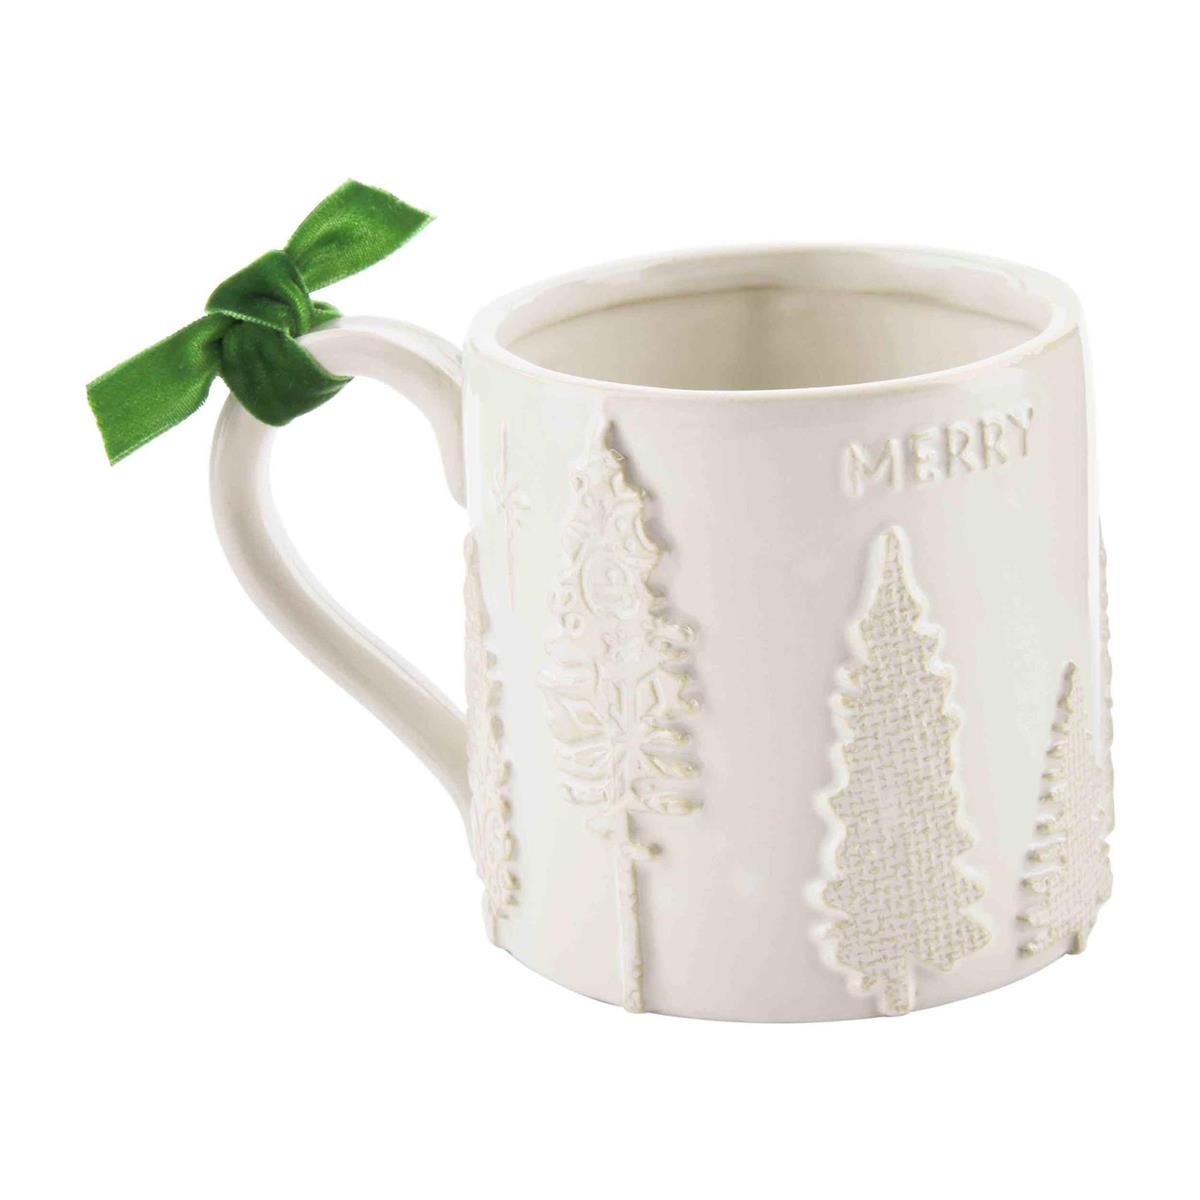 Merry White Tree Stoneware Mug